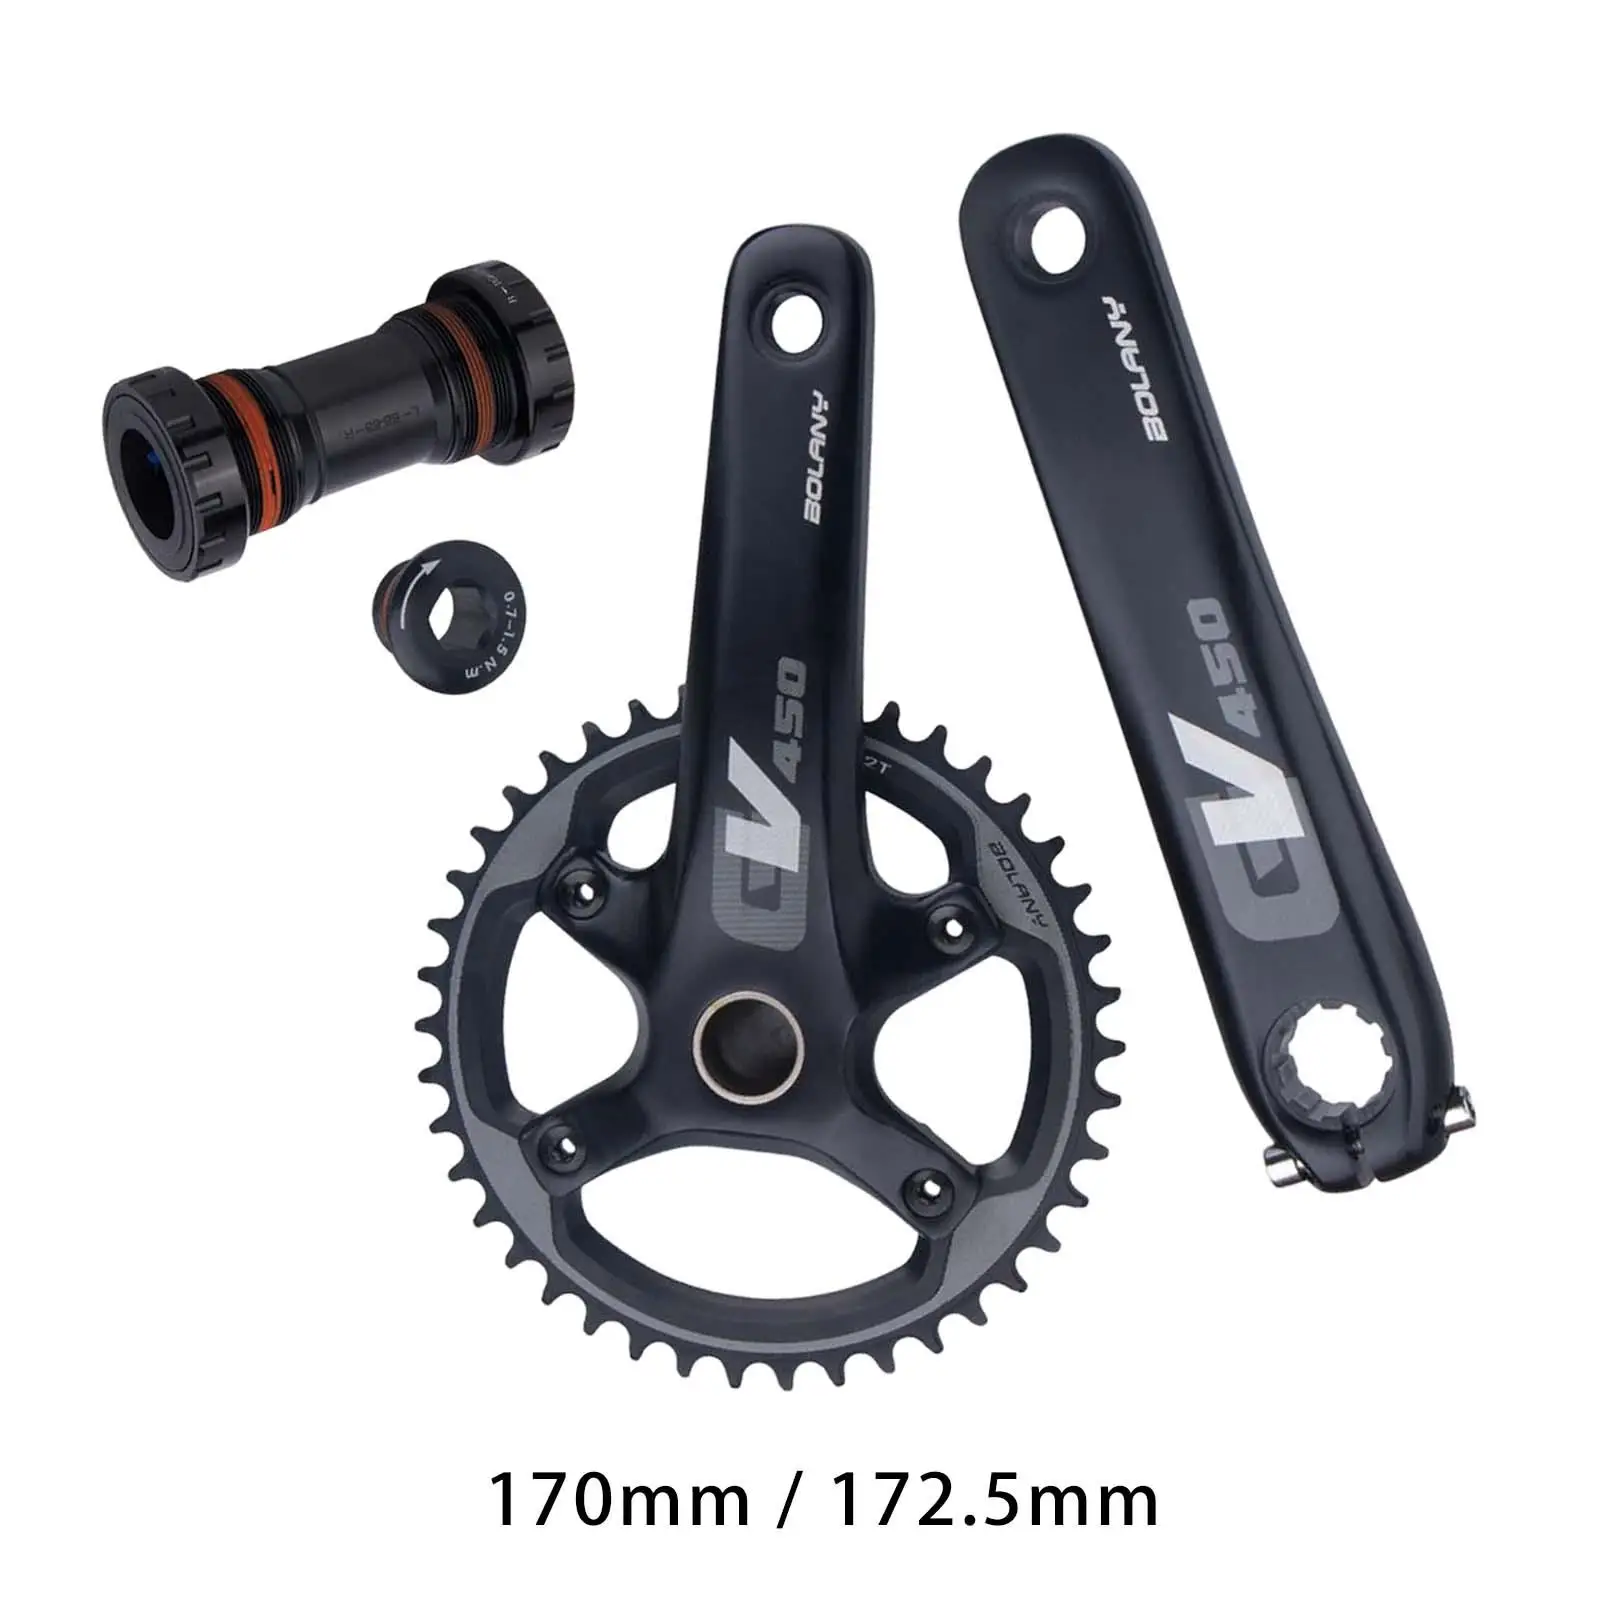 Mountain Bike Crankset Crank Arm Set Component Replacement Accessories